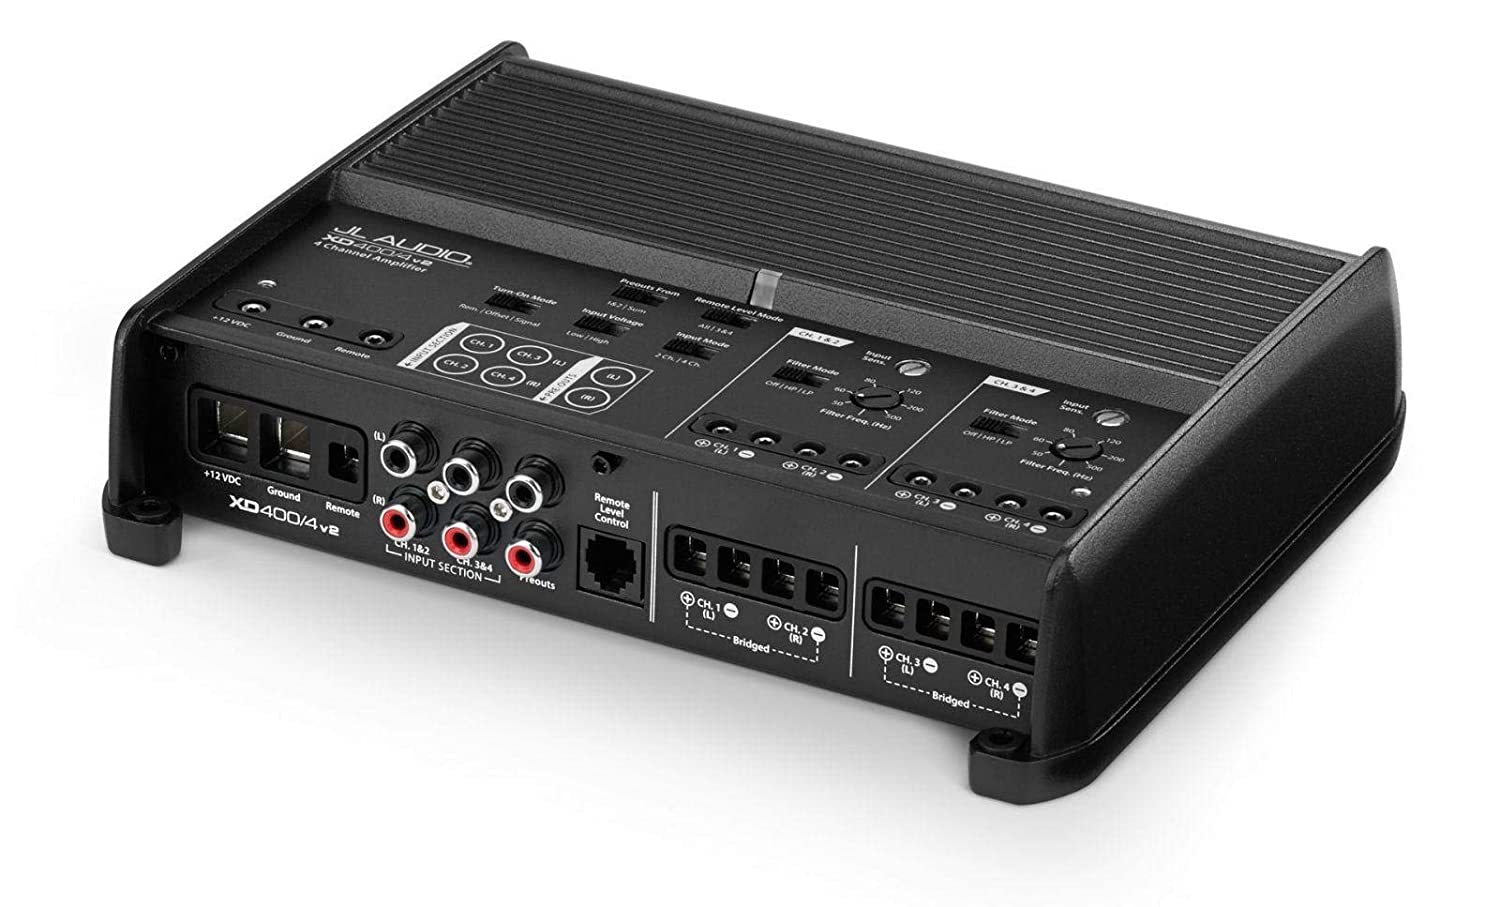 JL Audio XD400/4v2 4-channel car amplifier - 75 watts RMS x 4